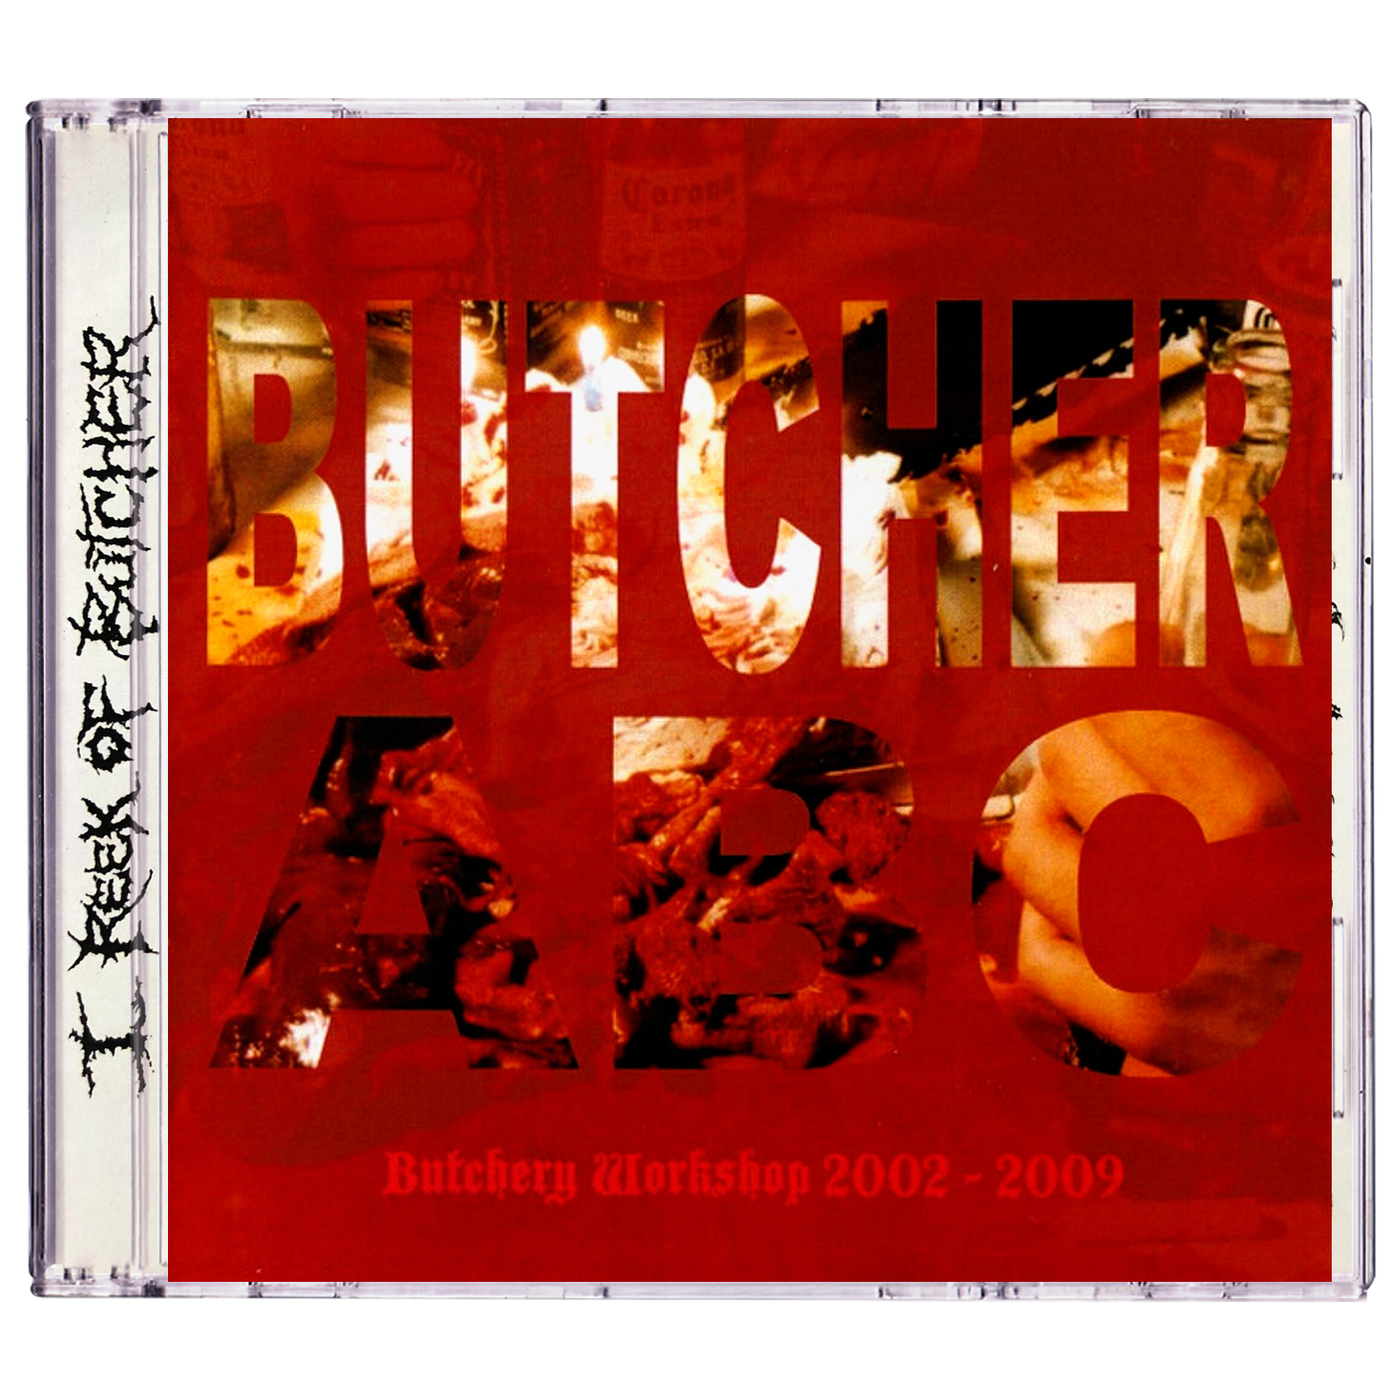 Butcher ABC 'Butchery Workshop 2002 - 2009' CD